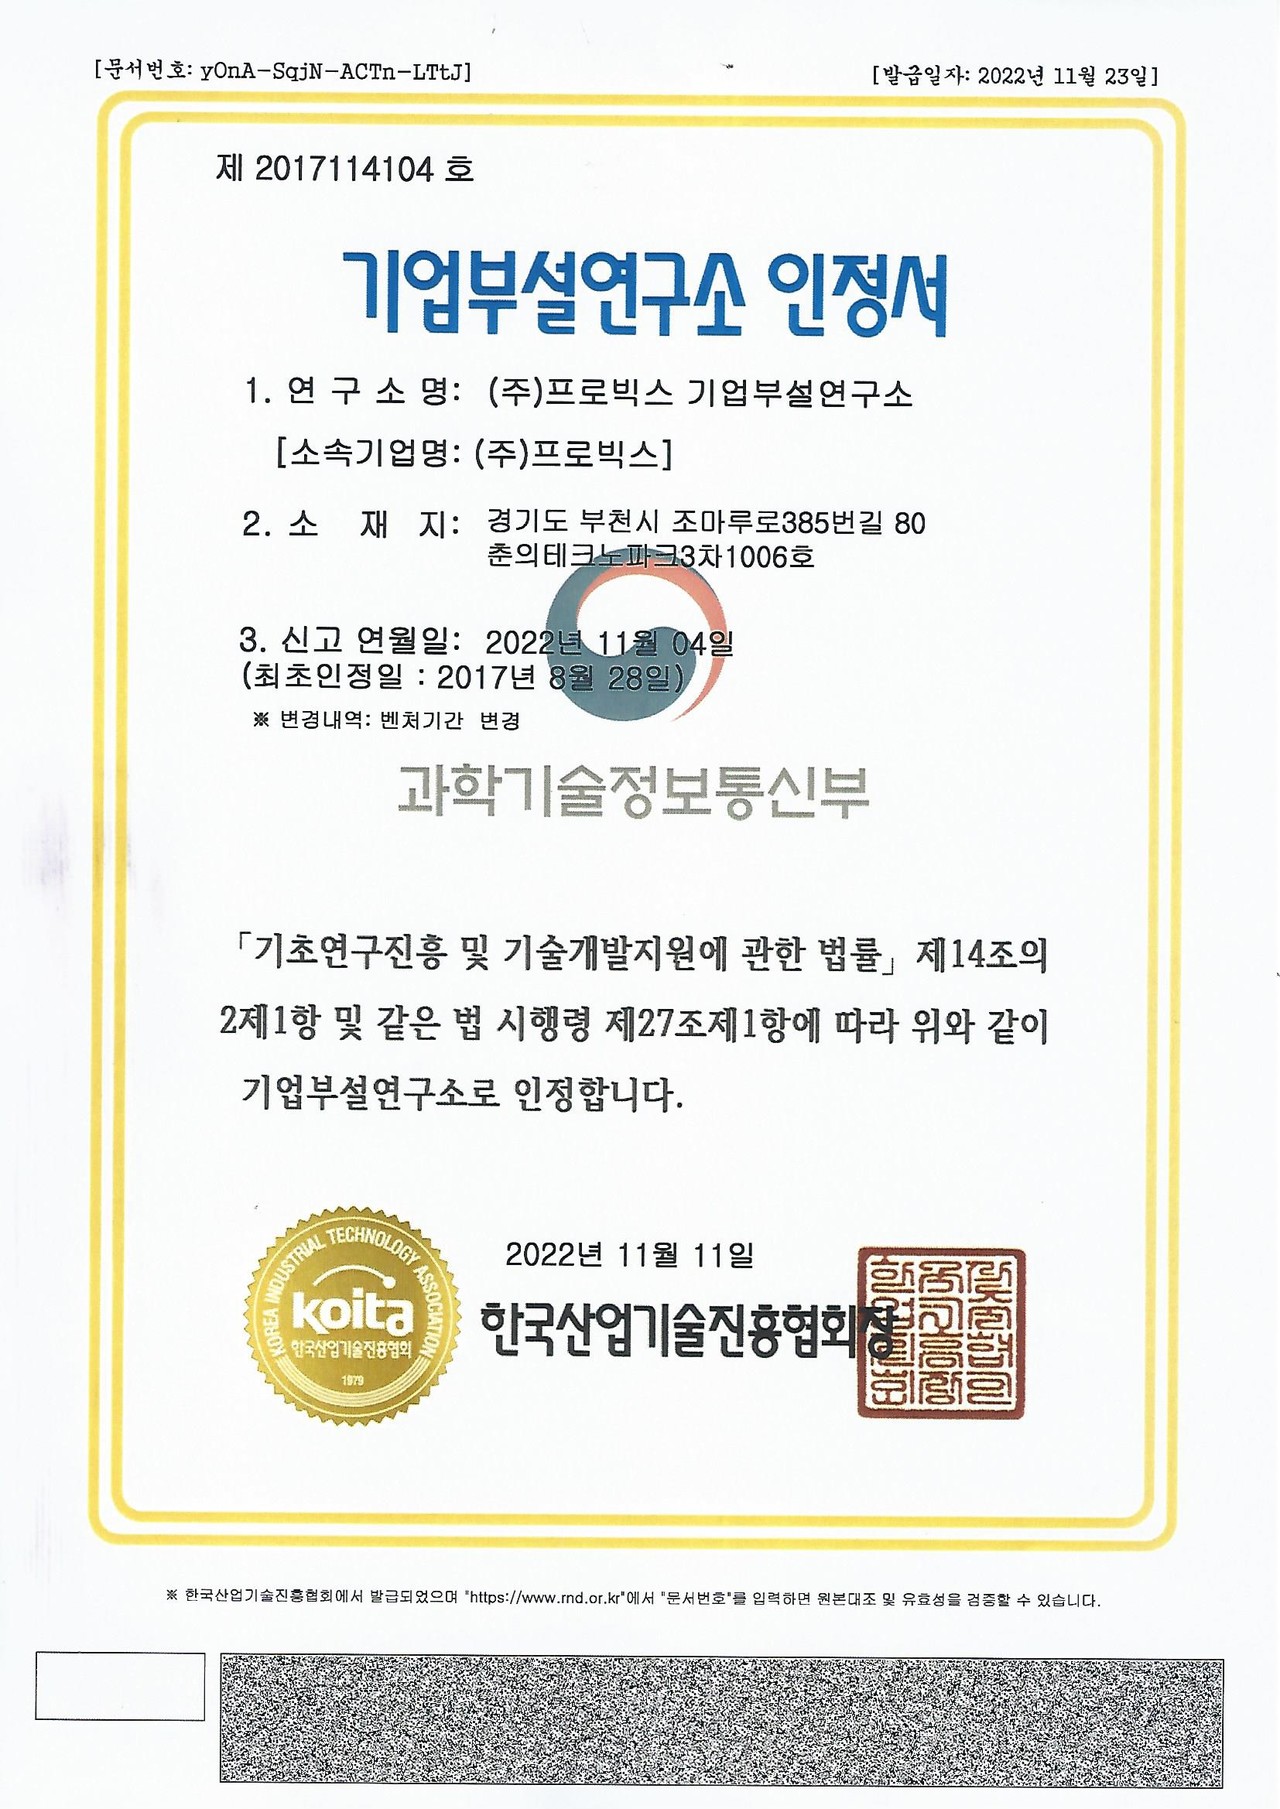 Corporate Research Center Certificate